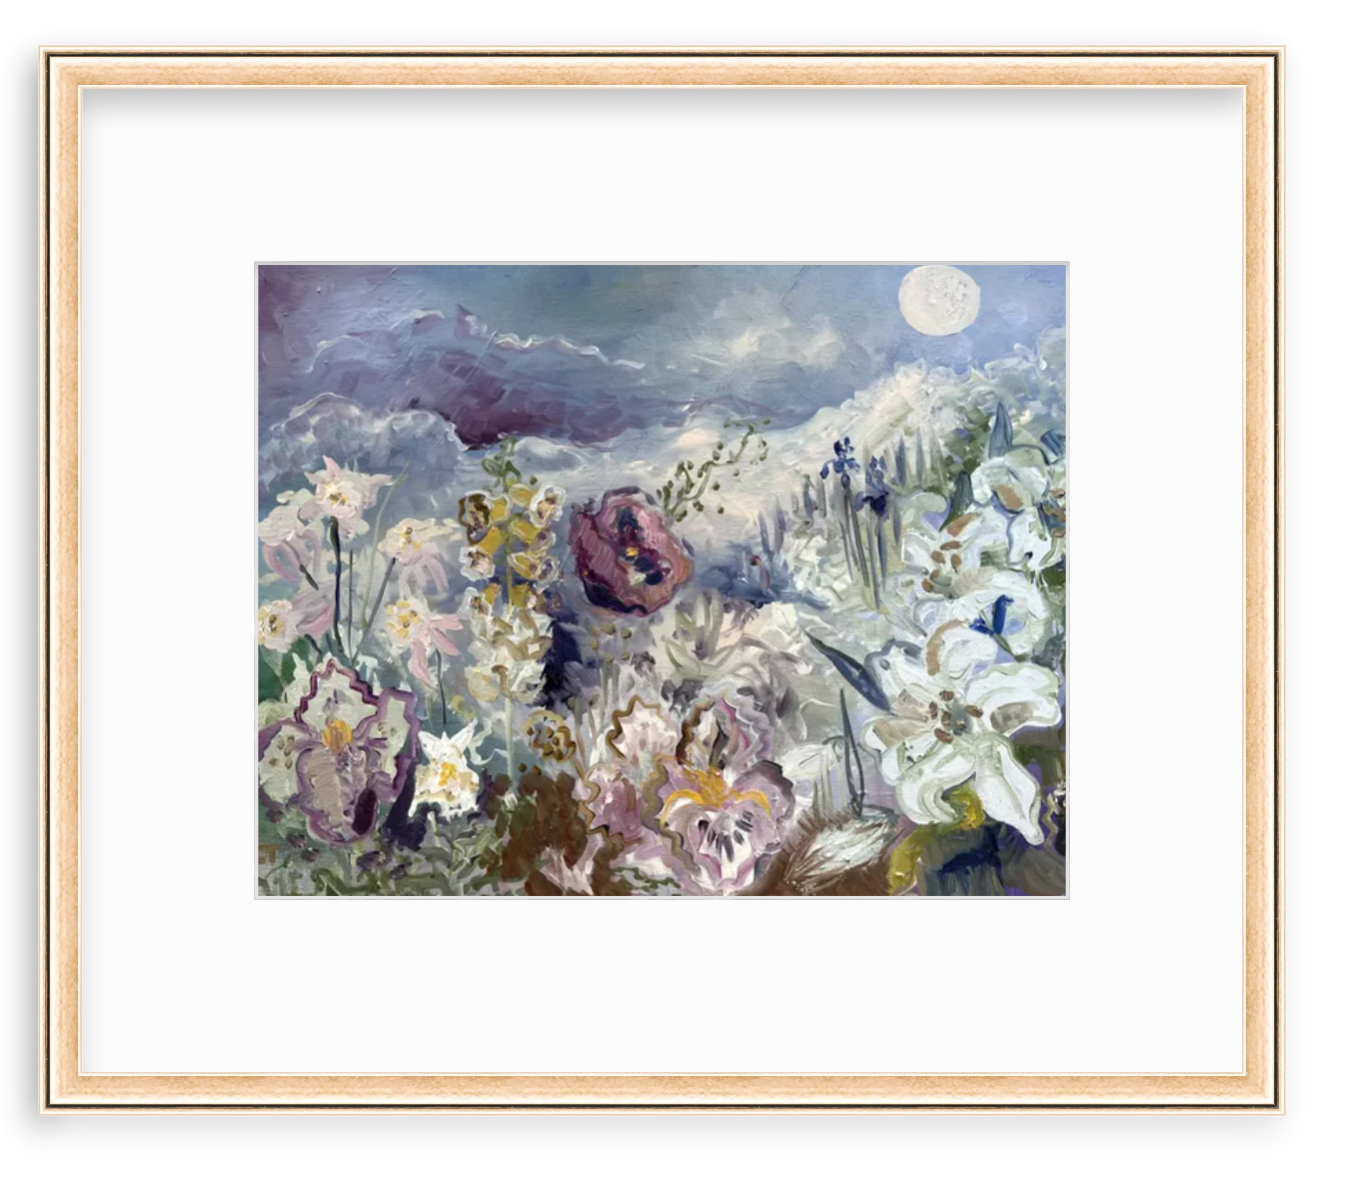 FRAMED PRINT "Spring Moon Garden" a Horizontal Fine Art Giclee Reproduction